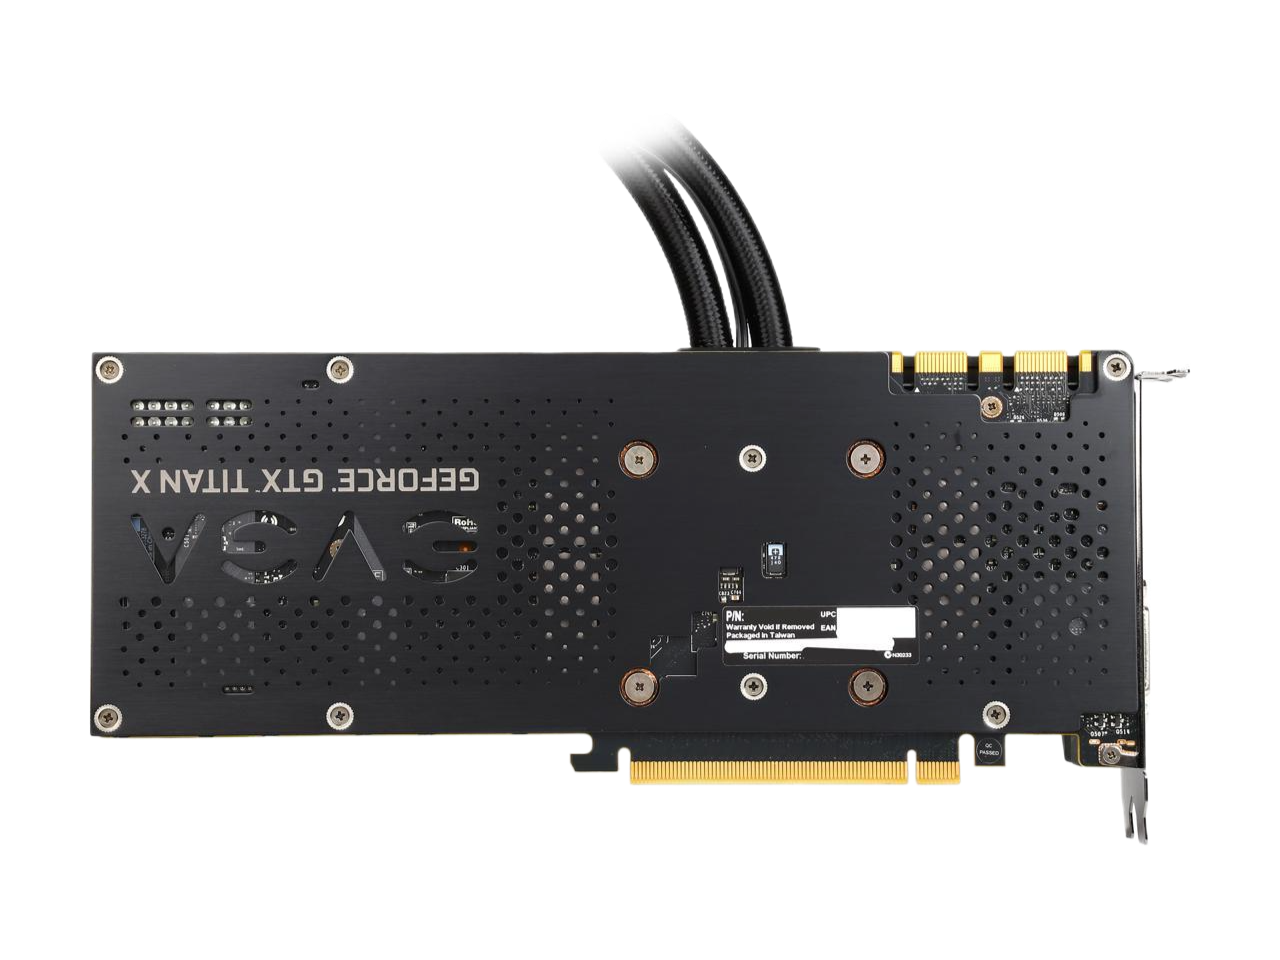 EVGA GeForce GTX TITAN X 12GB HYBRID GAMING Graphics Card 12G-P4-1999-KR